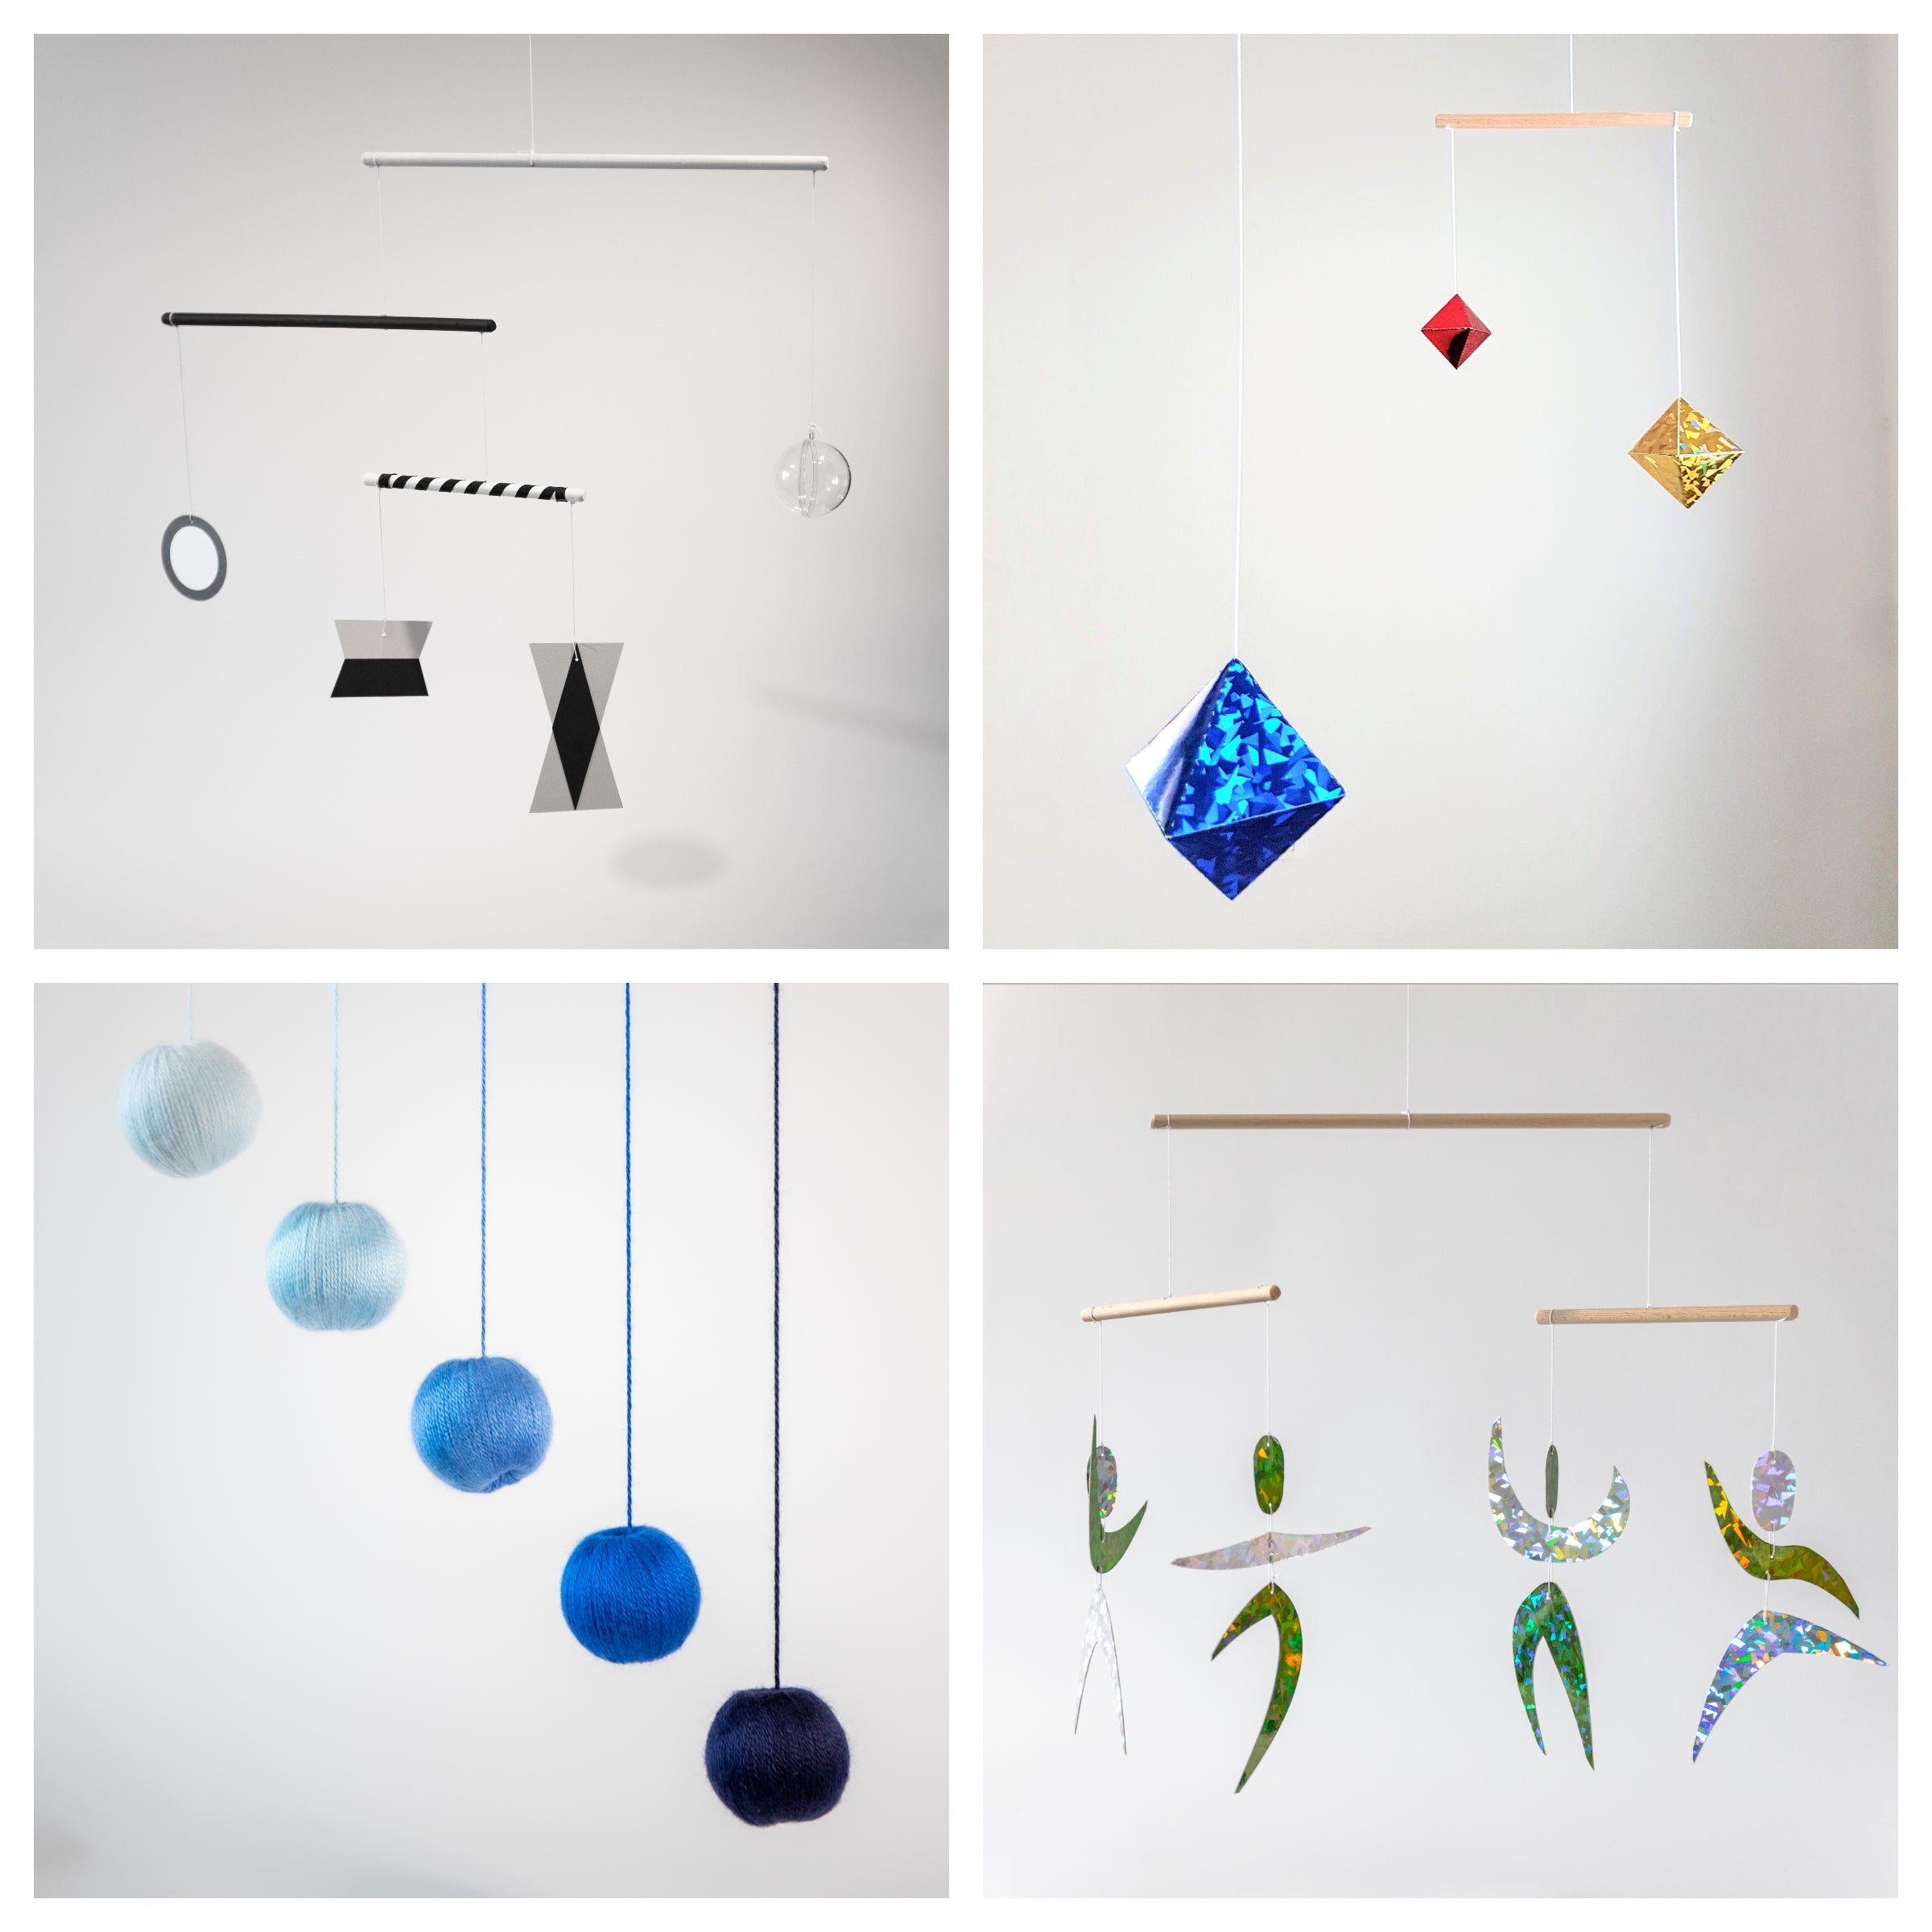 Set of 4 x montessori mobile - Munari, Blue Gobbi, Octahedron, Dancers. Montessori mobile. Baby mobile. Hanging mobile. Crib toy.